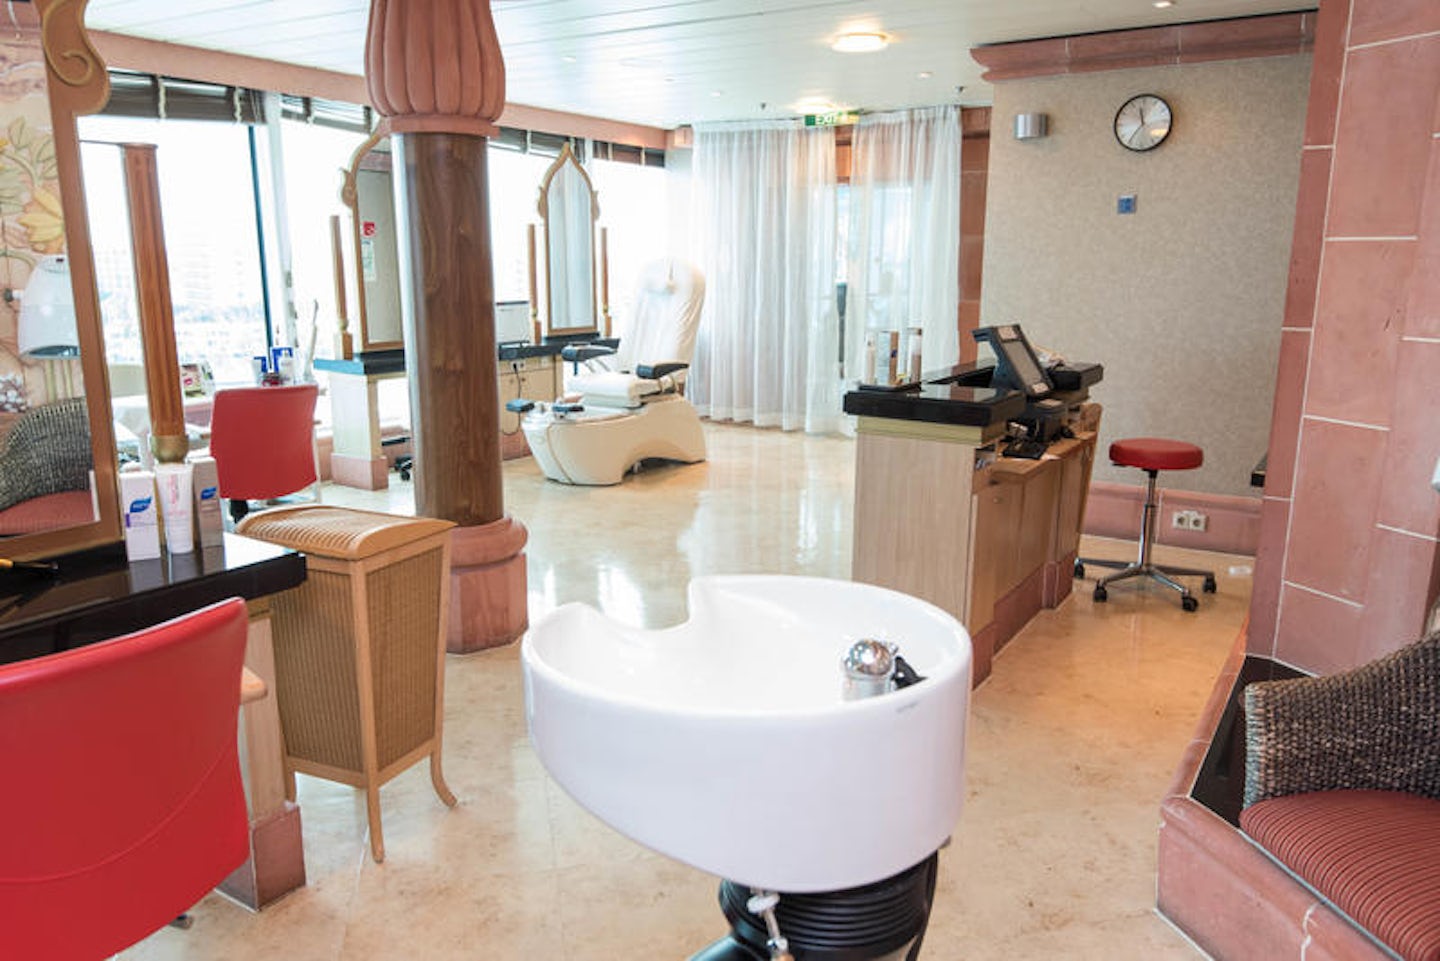 Vitality Spa & Salon on Brilliance of the Seas